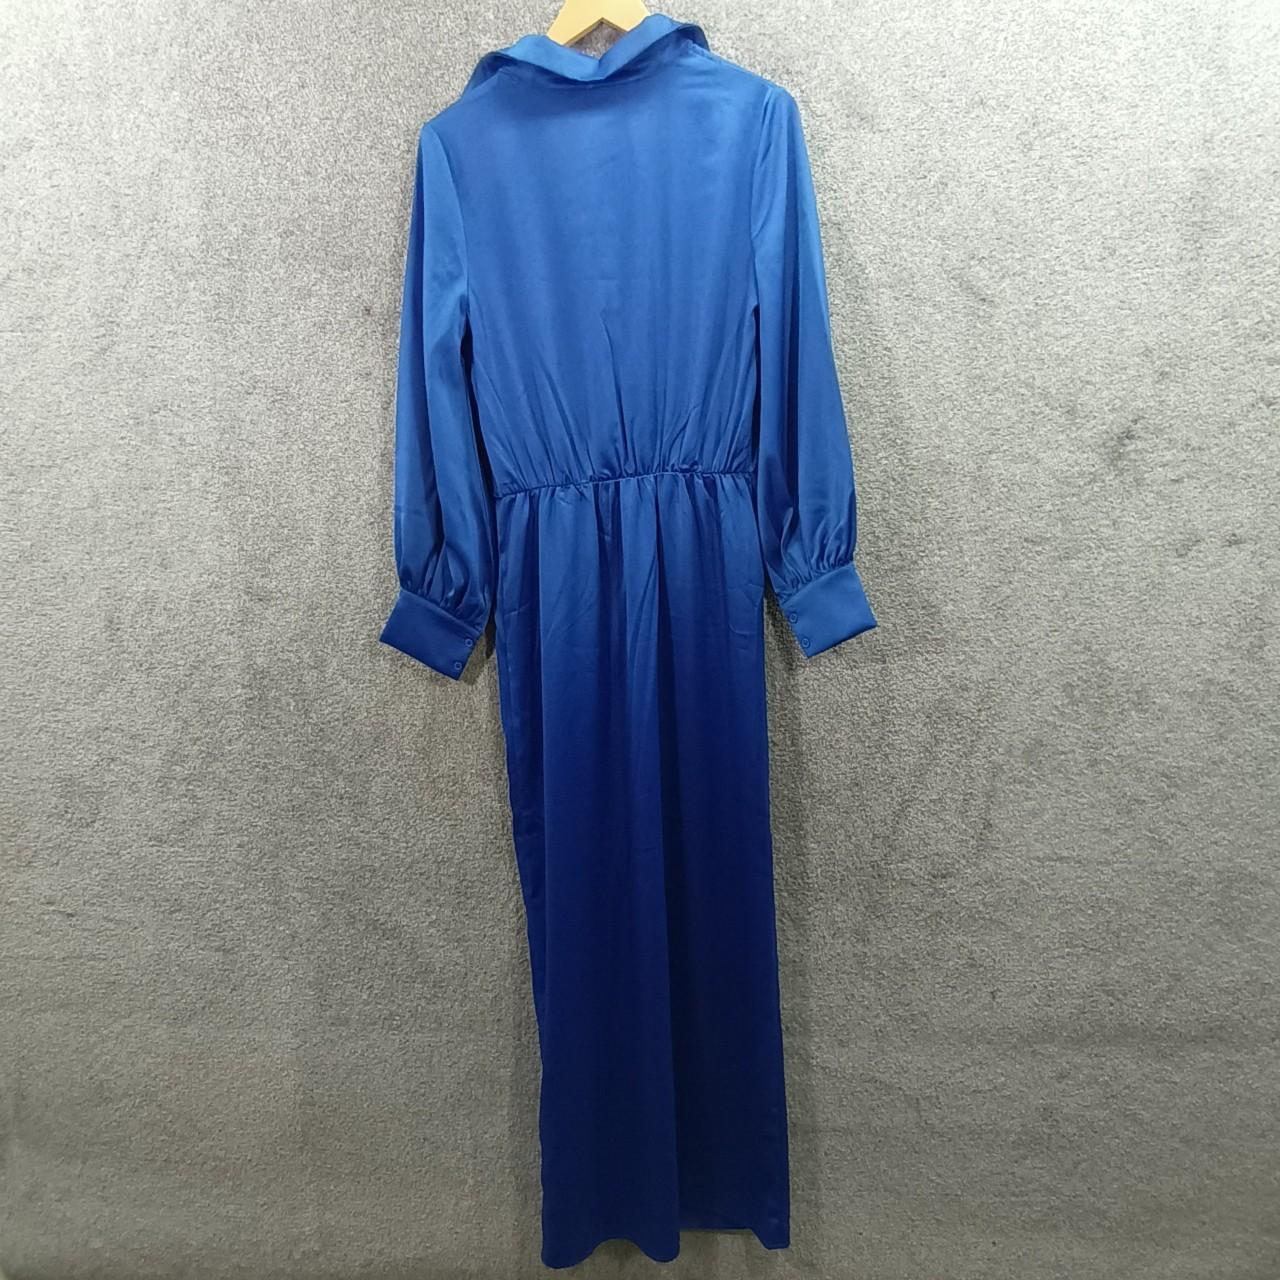 MISSGUIDED BLUE SATIN MAXI DRESS V FRONT SHIRT LONG... - Depop